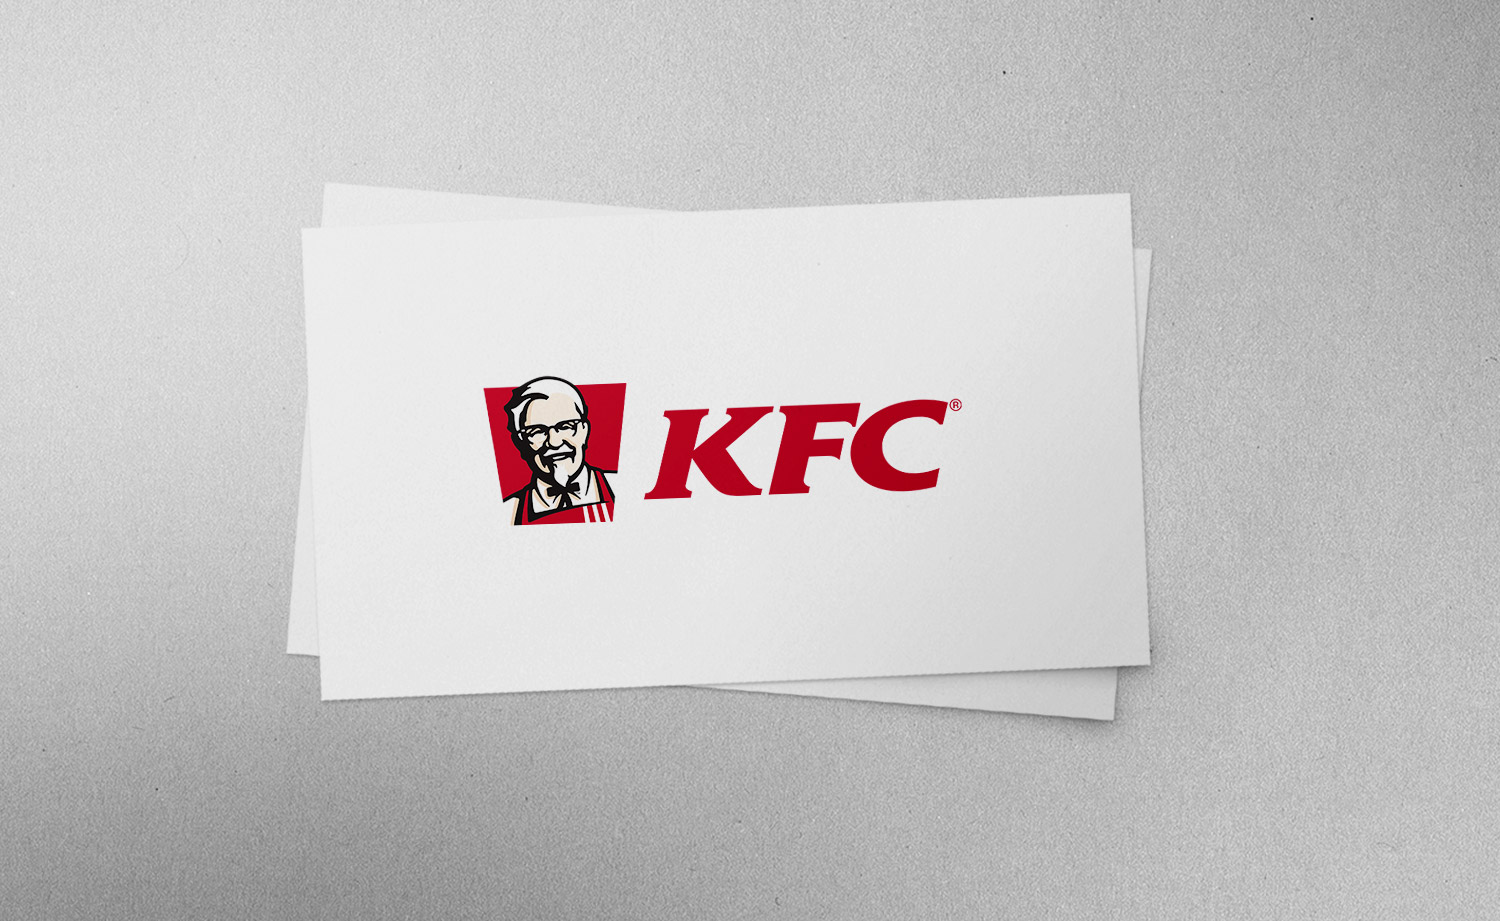 KFC has started cooperation with Biuro Podróży Reklamy advertising agency